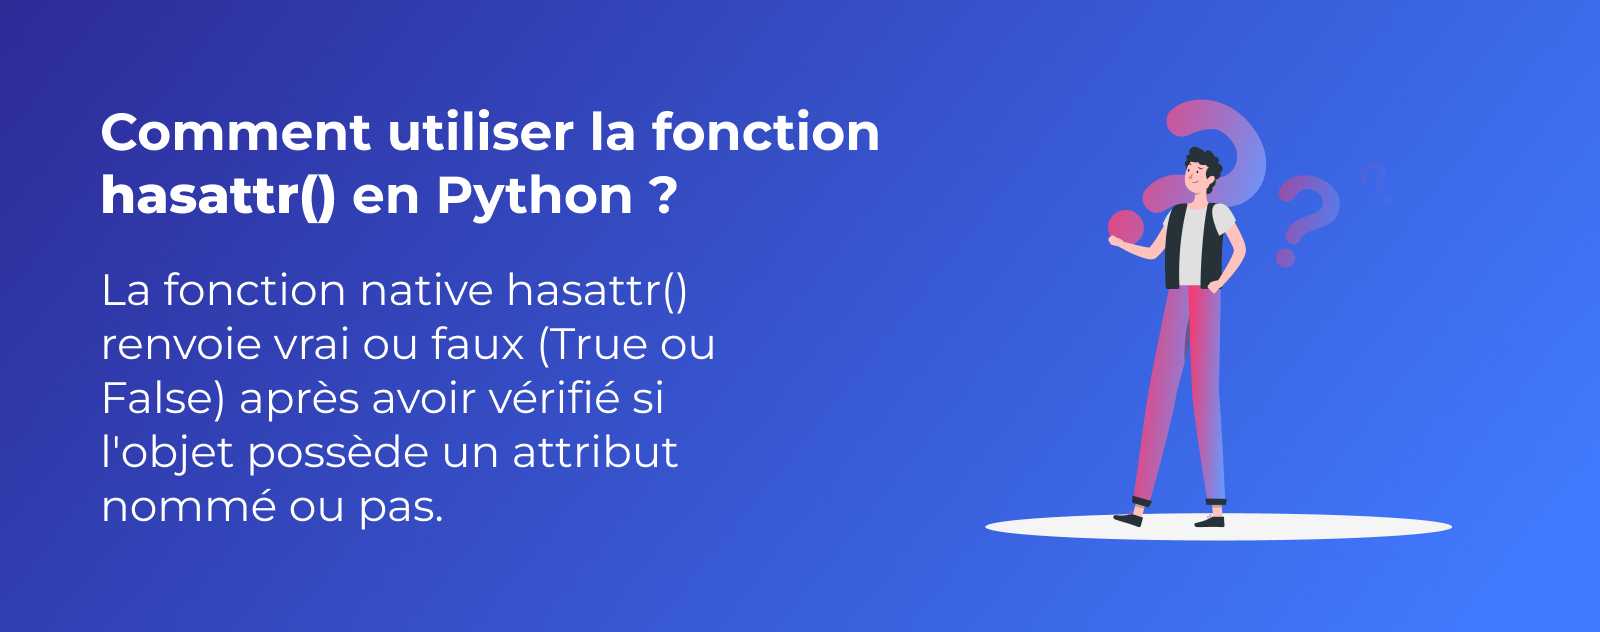 La fonction hasattr en Python